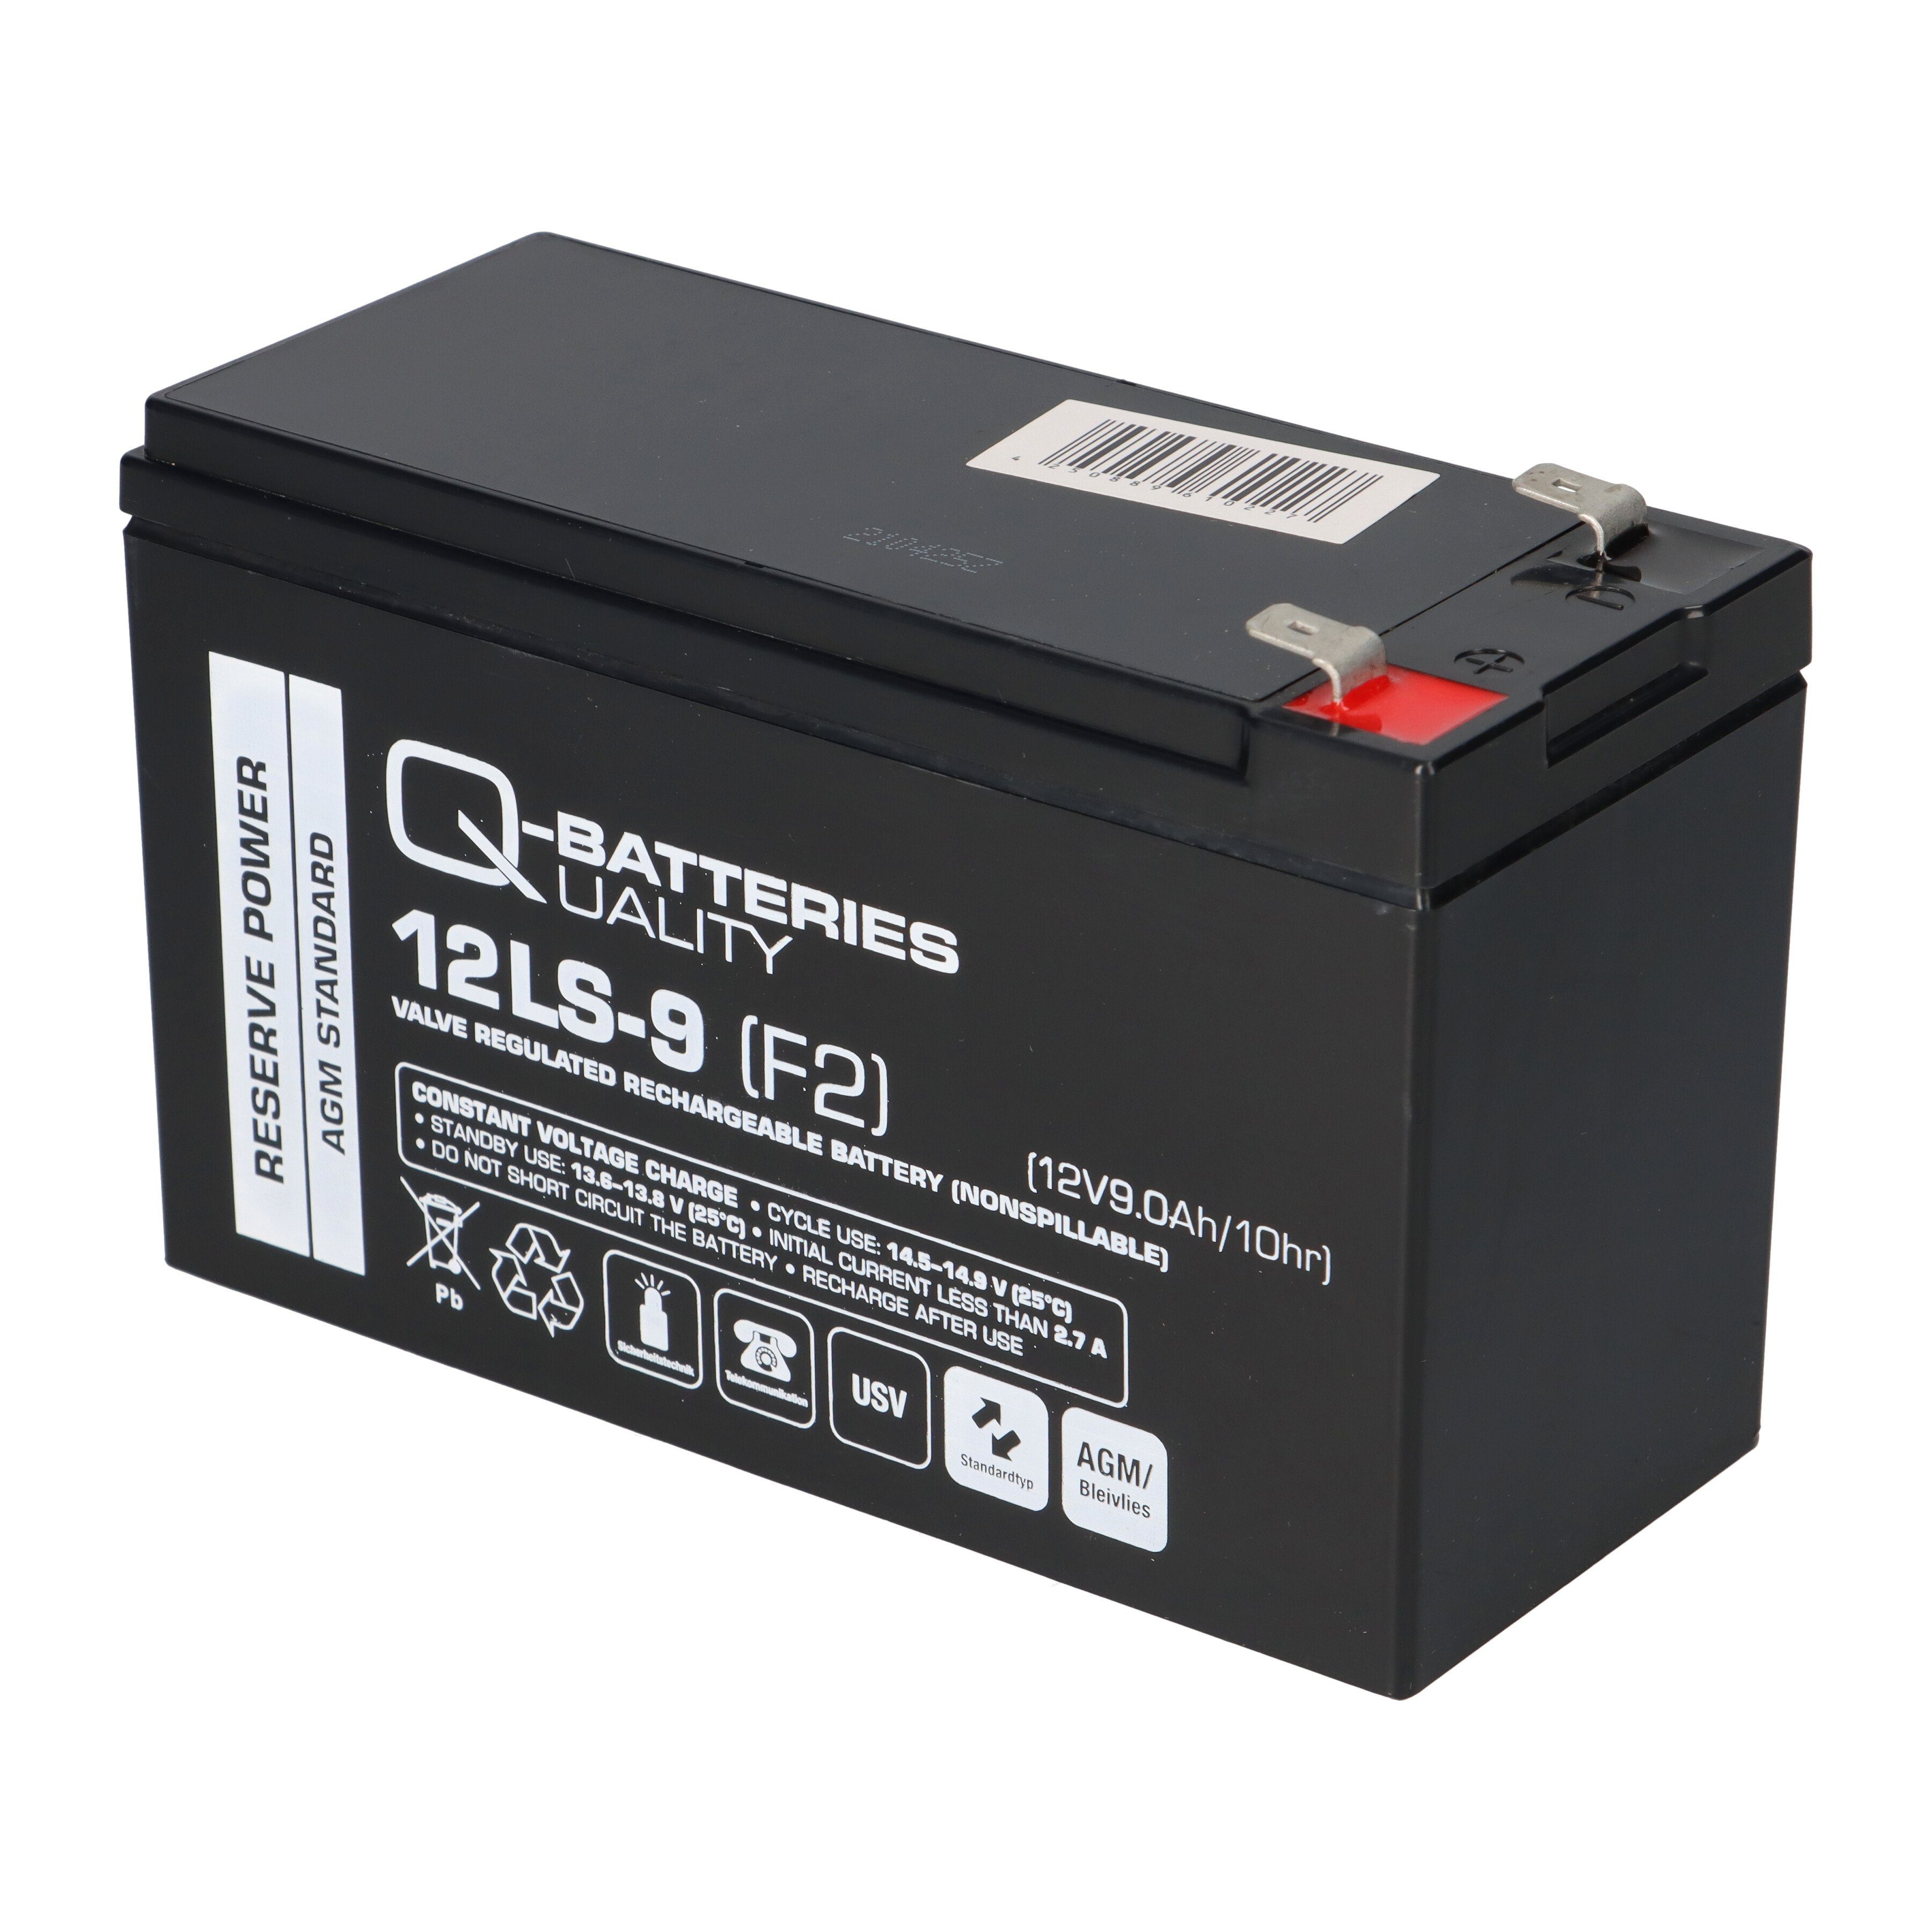 Q-Batteries Q-Batteries Akku Jahre F2 Bleiakkus 10 12V AGM 9Ah 12LS-9